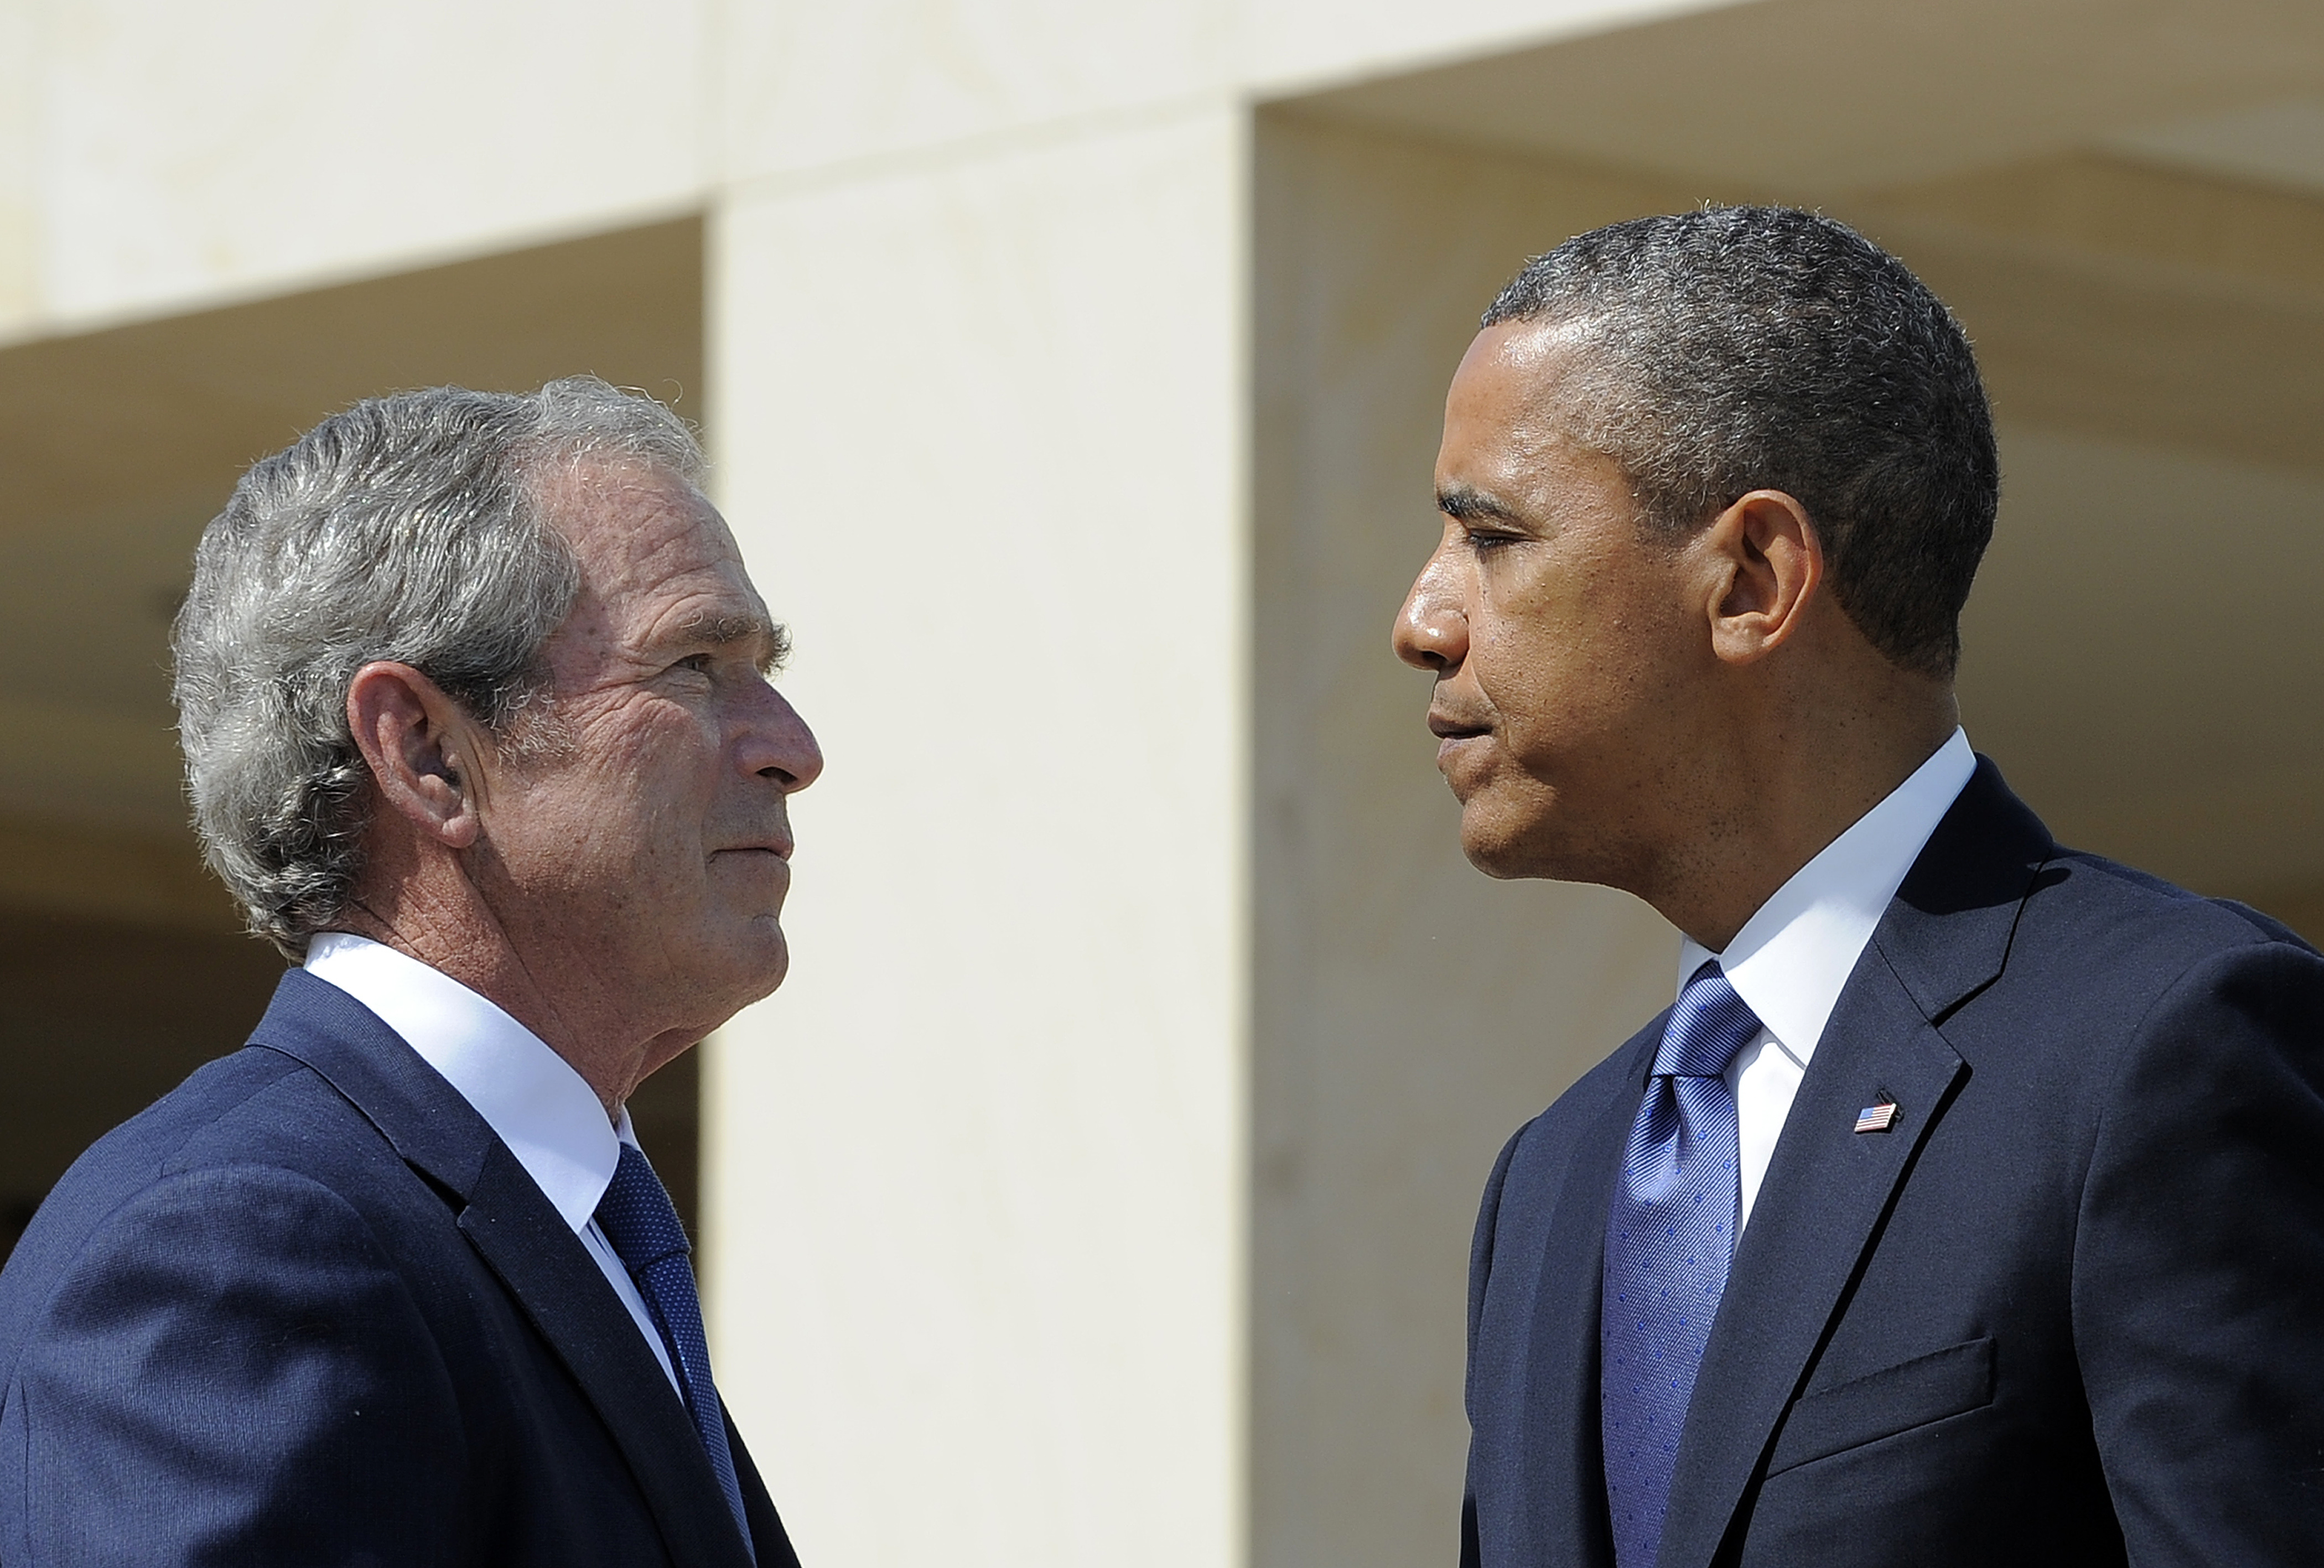 President Barack Obama and former President George W. Bush